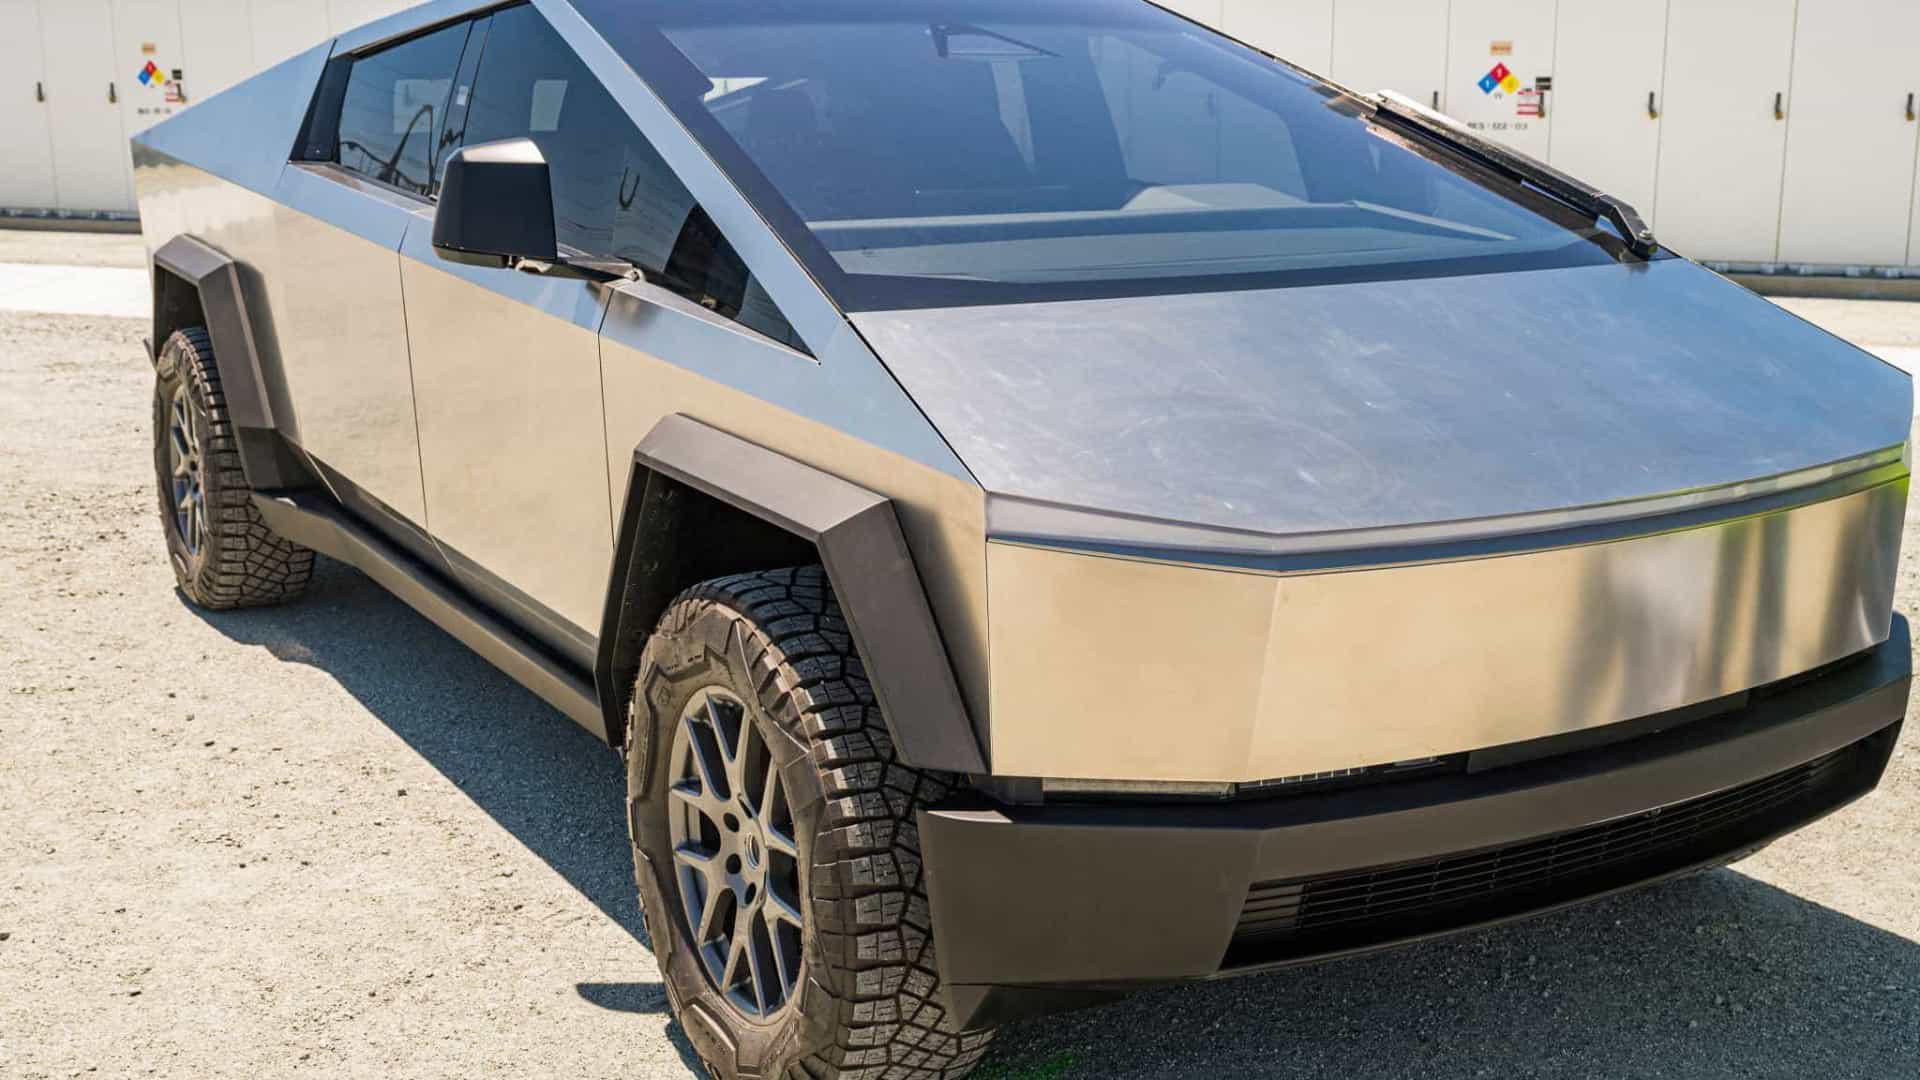 Tesla Cybertruck: All About Elon Musk’s Electric Pickup